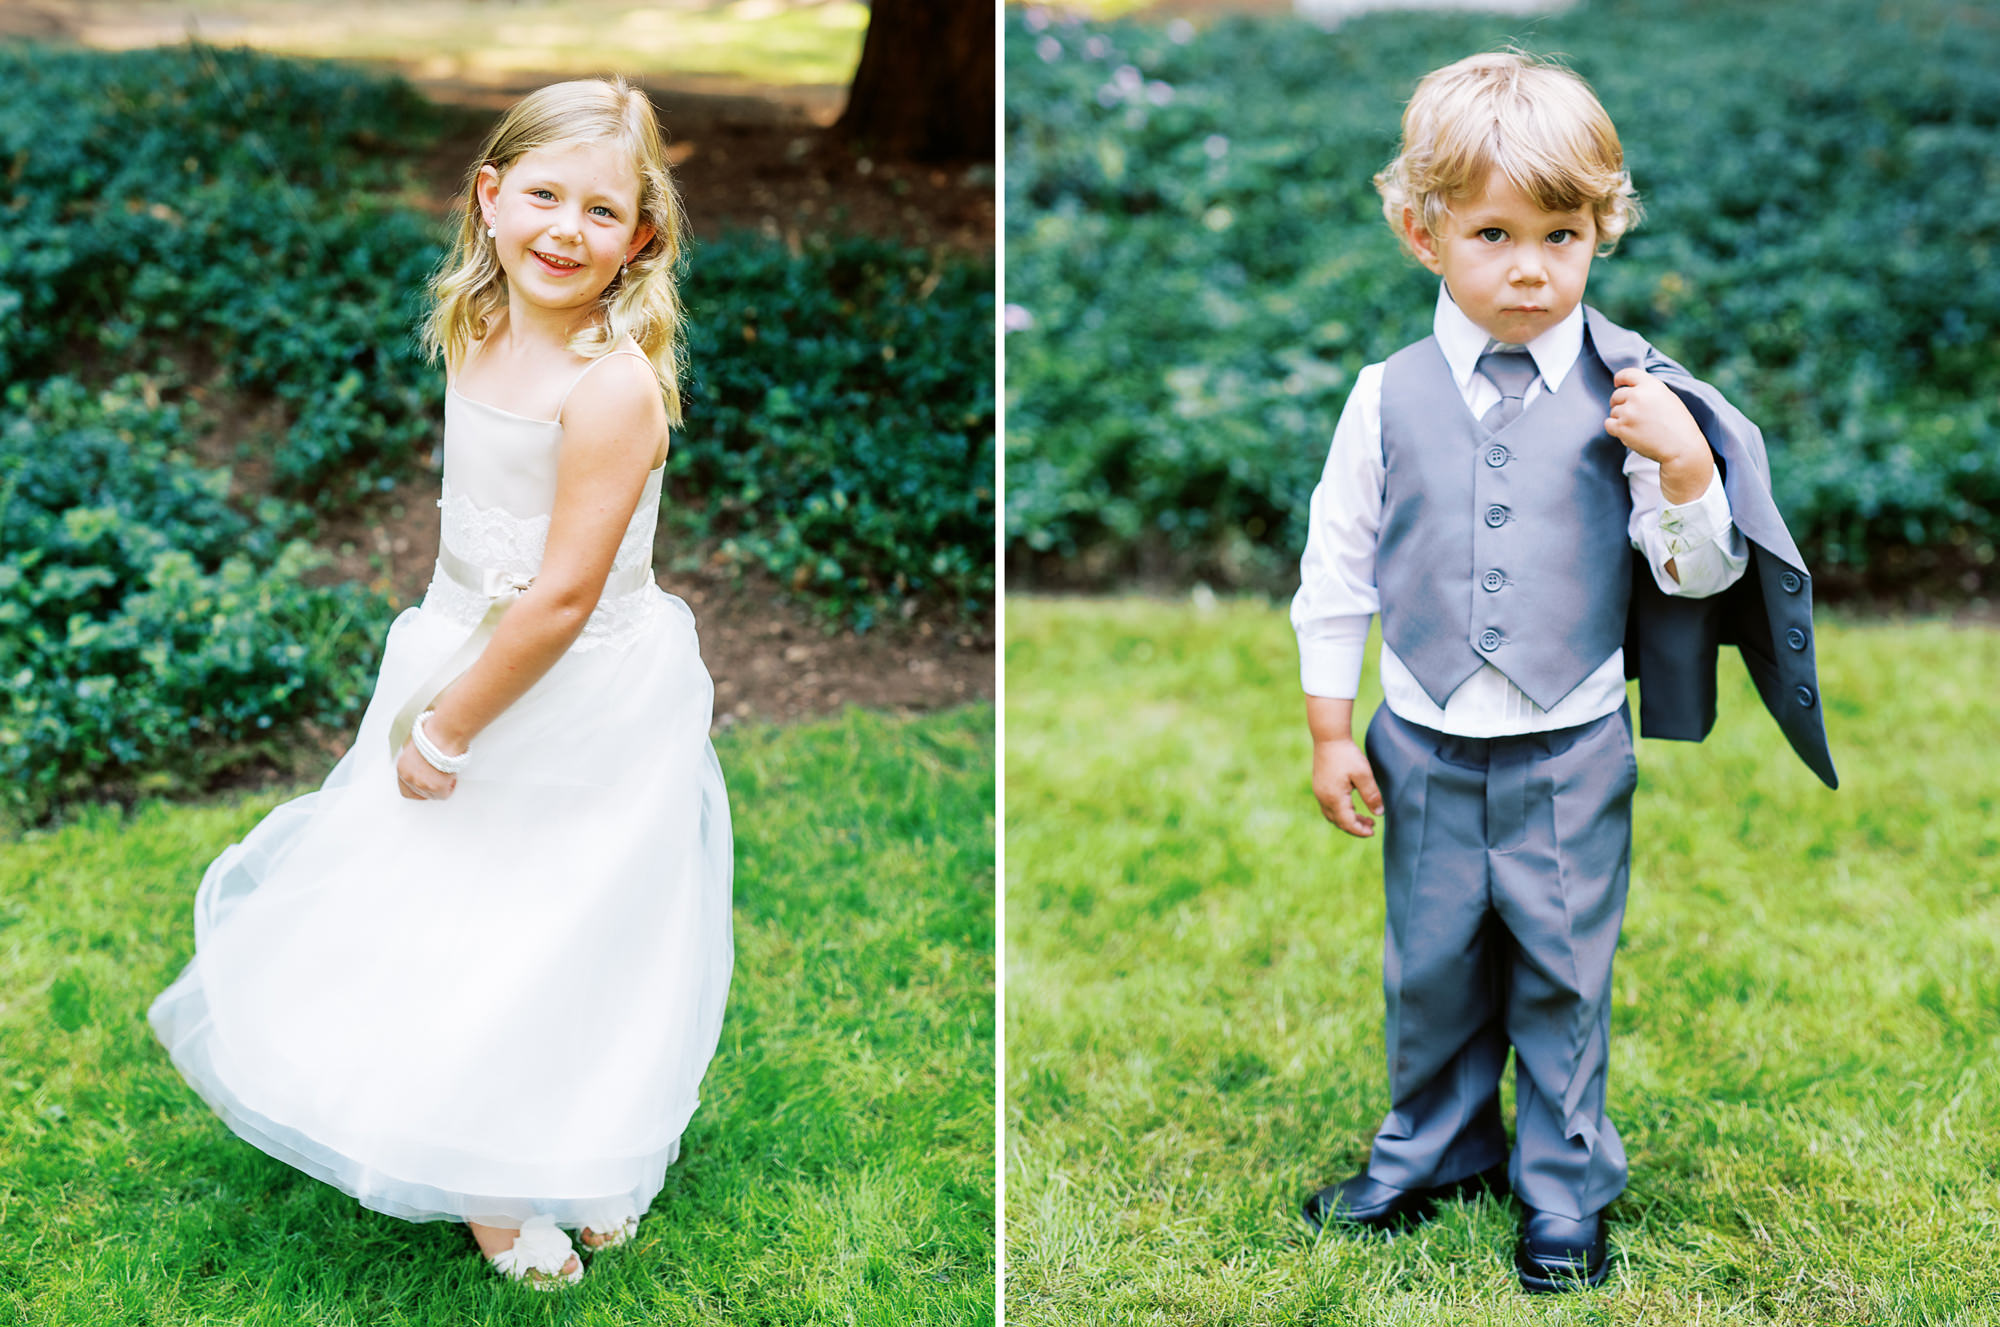 Seattle backyard wedding: Cute kids at wedding